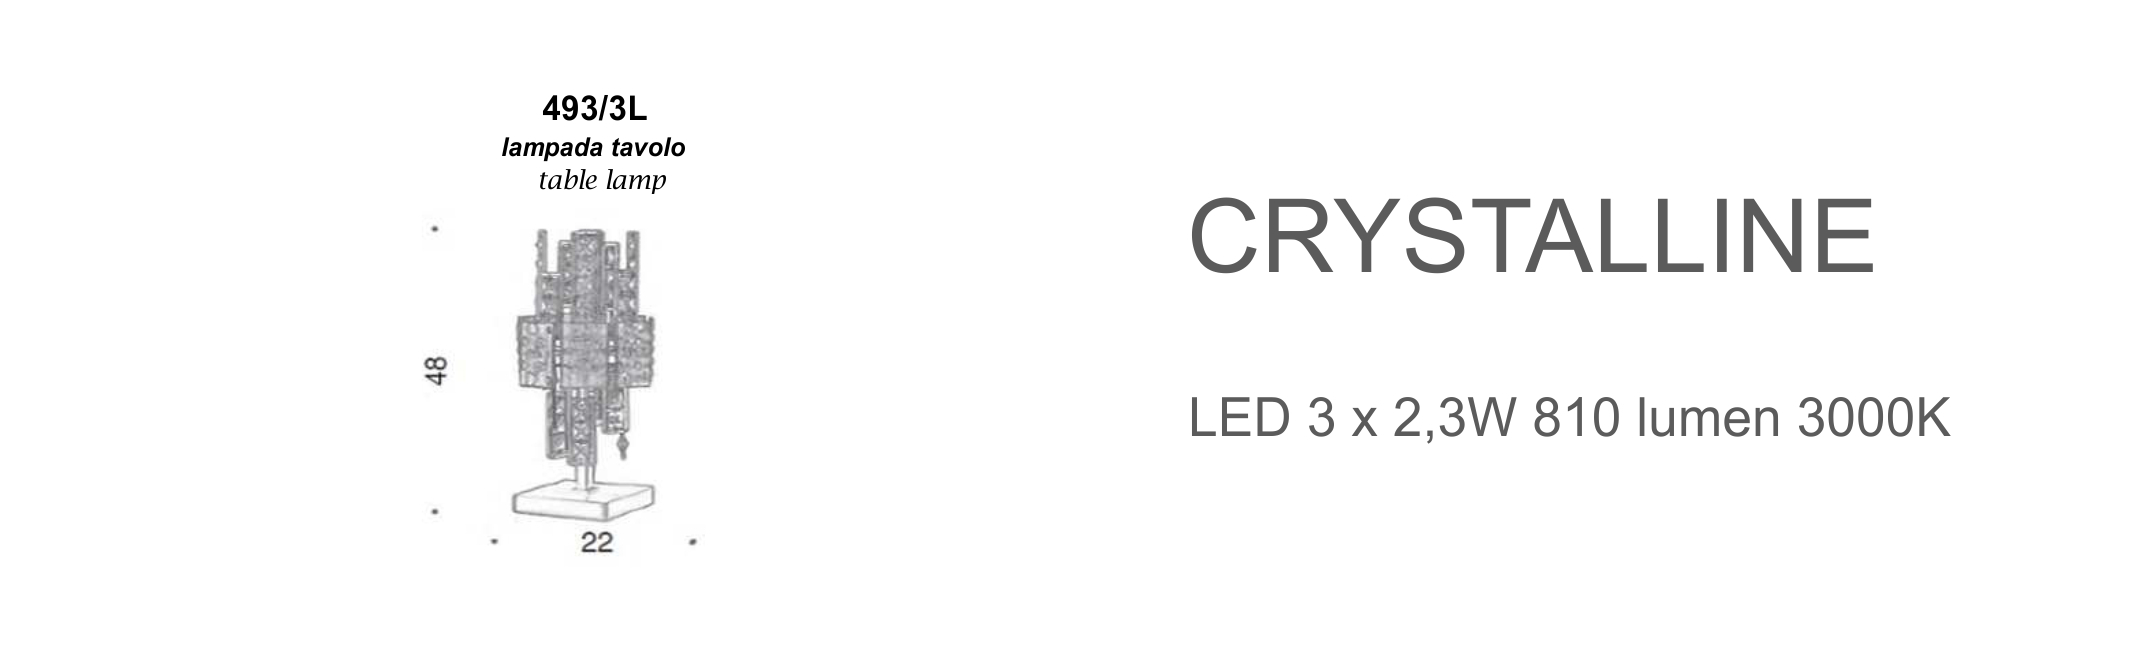 Crystalline 493/3L